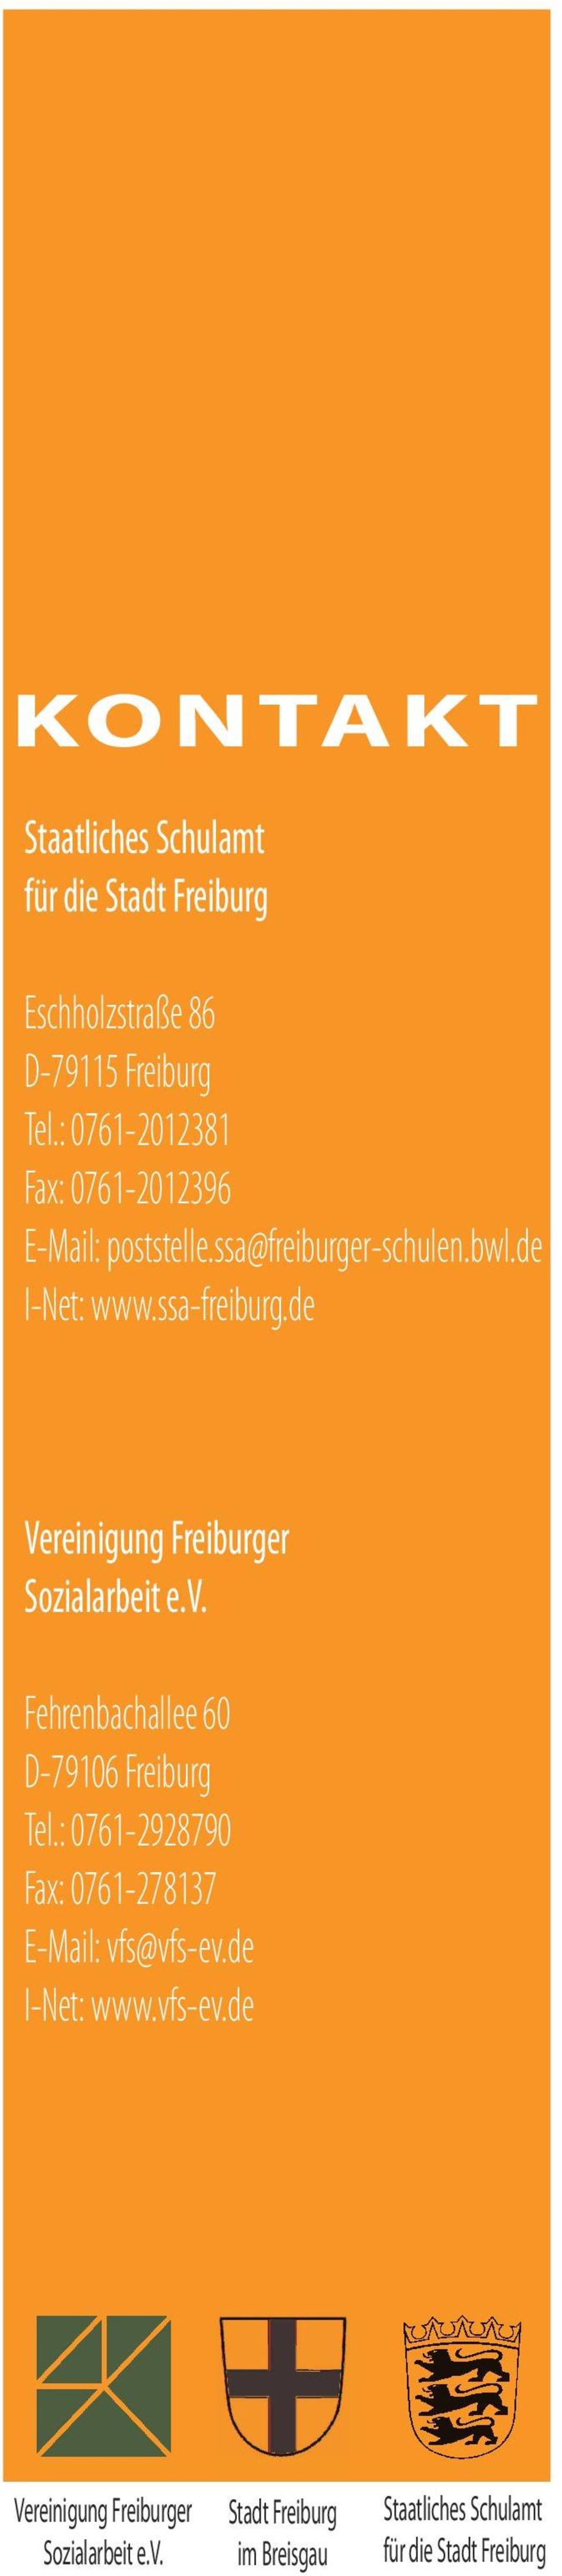 de Vereinigung Freiburger Sozialarbeit e.v. Fehrenbachallee 60 D-9106 Freiburg Tel.